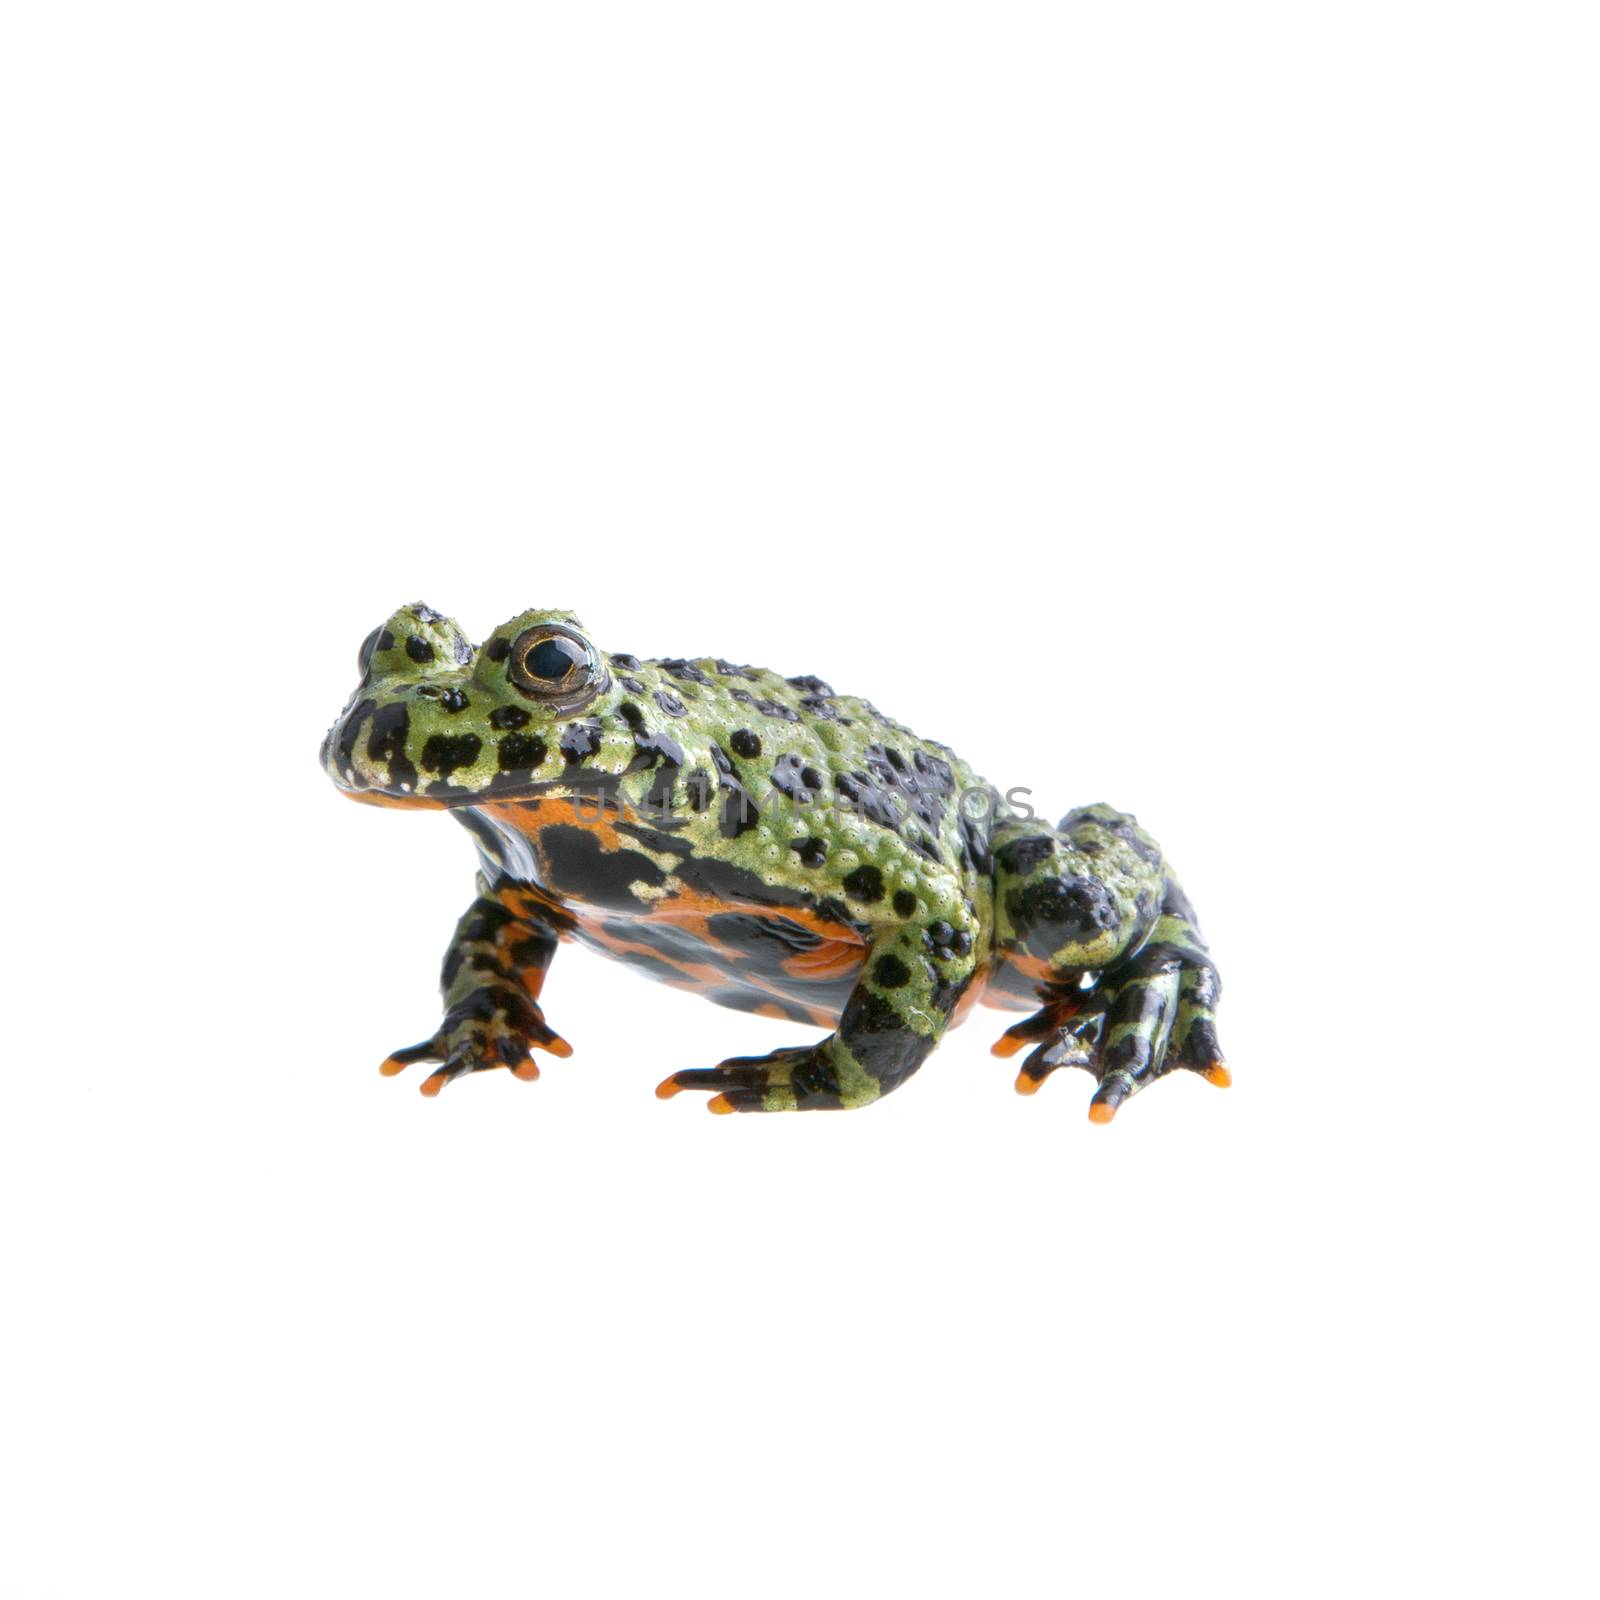 Frog (Bombina orientalis) on a white background by neryx